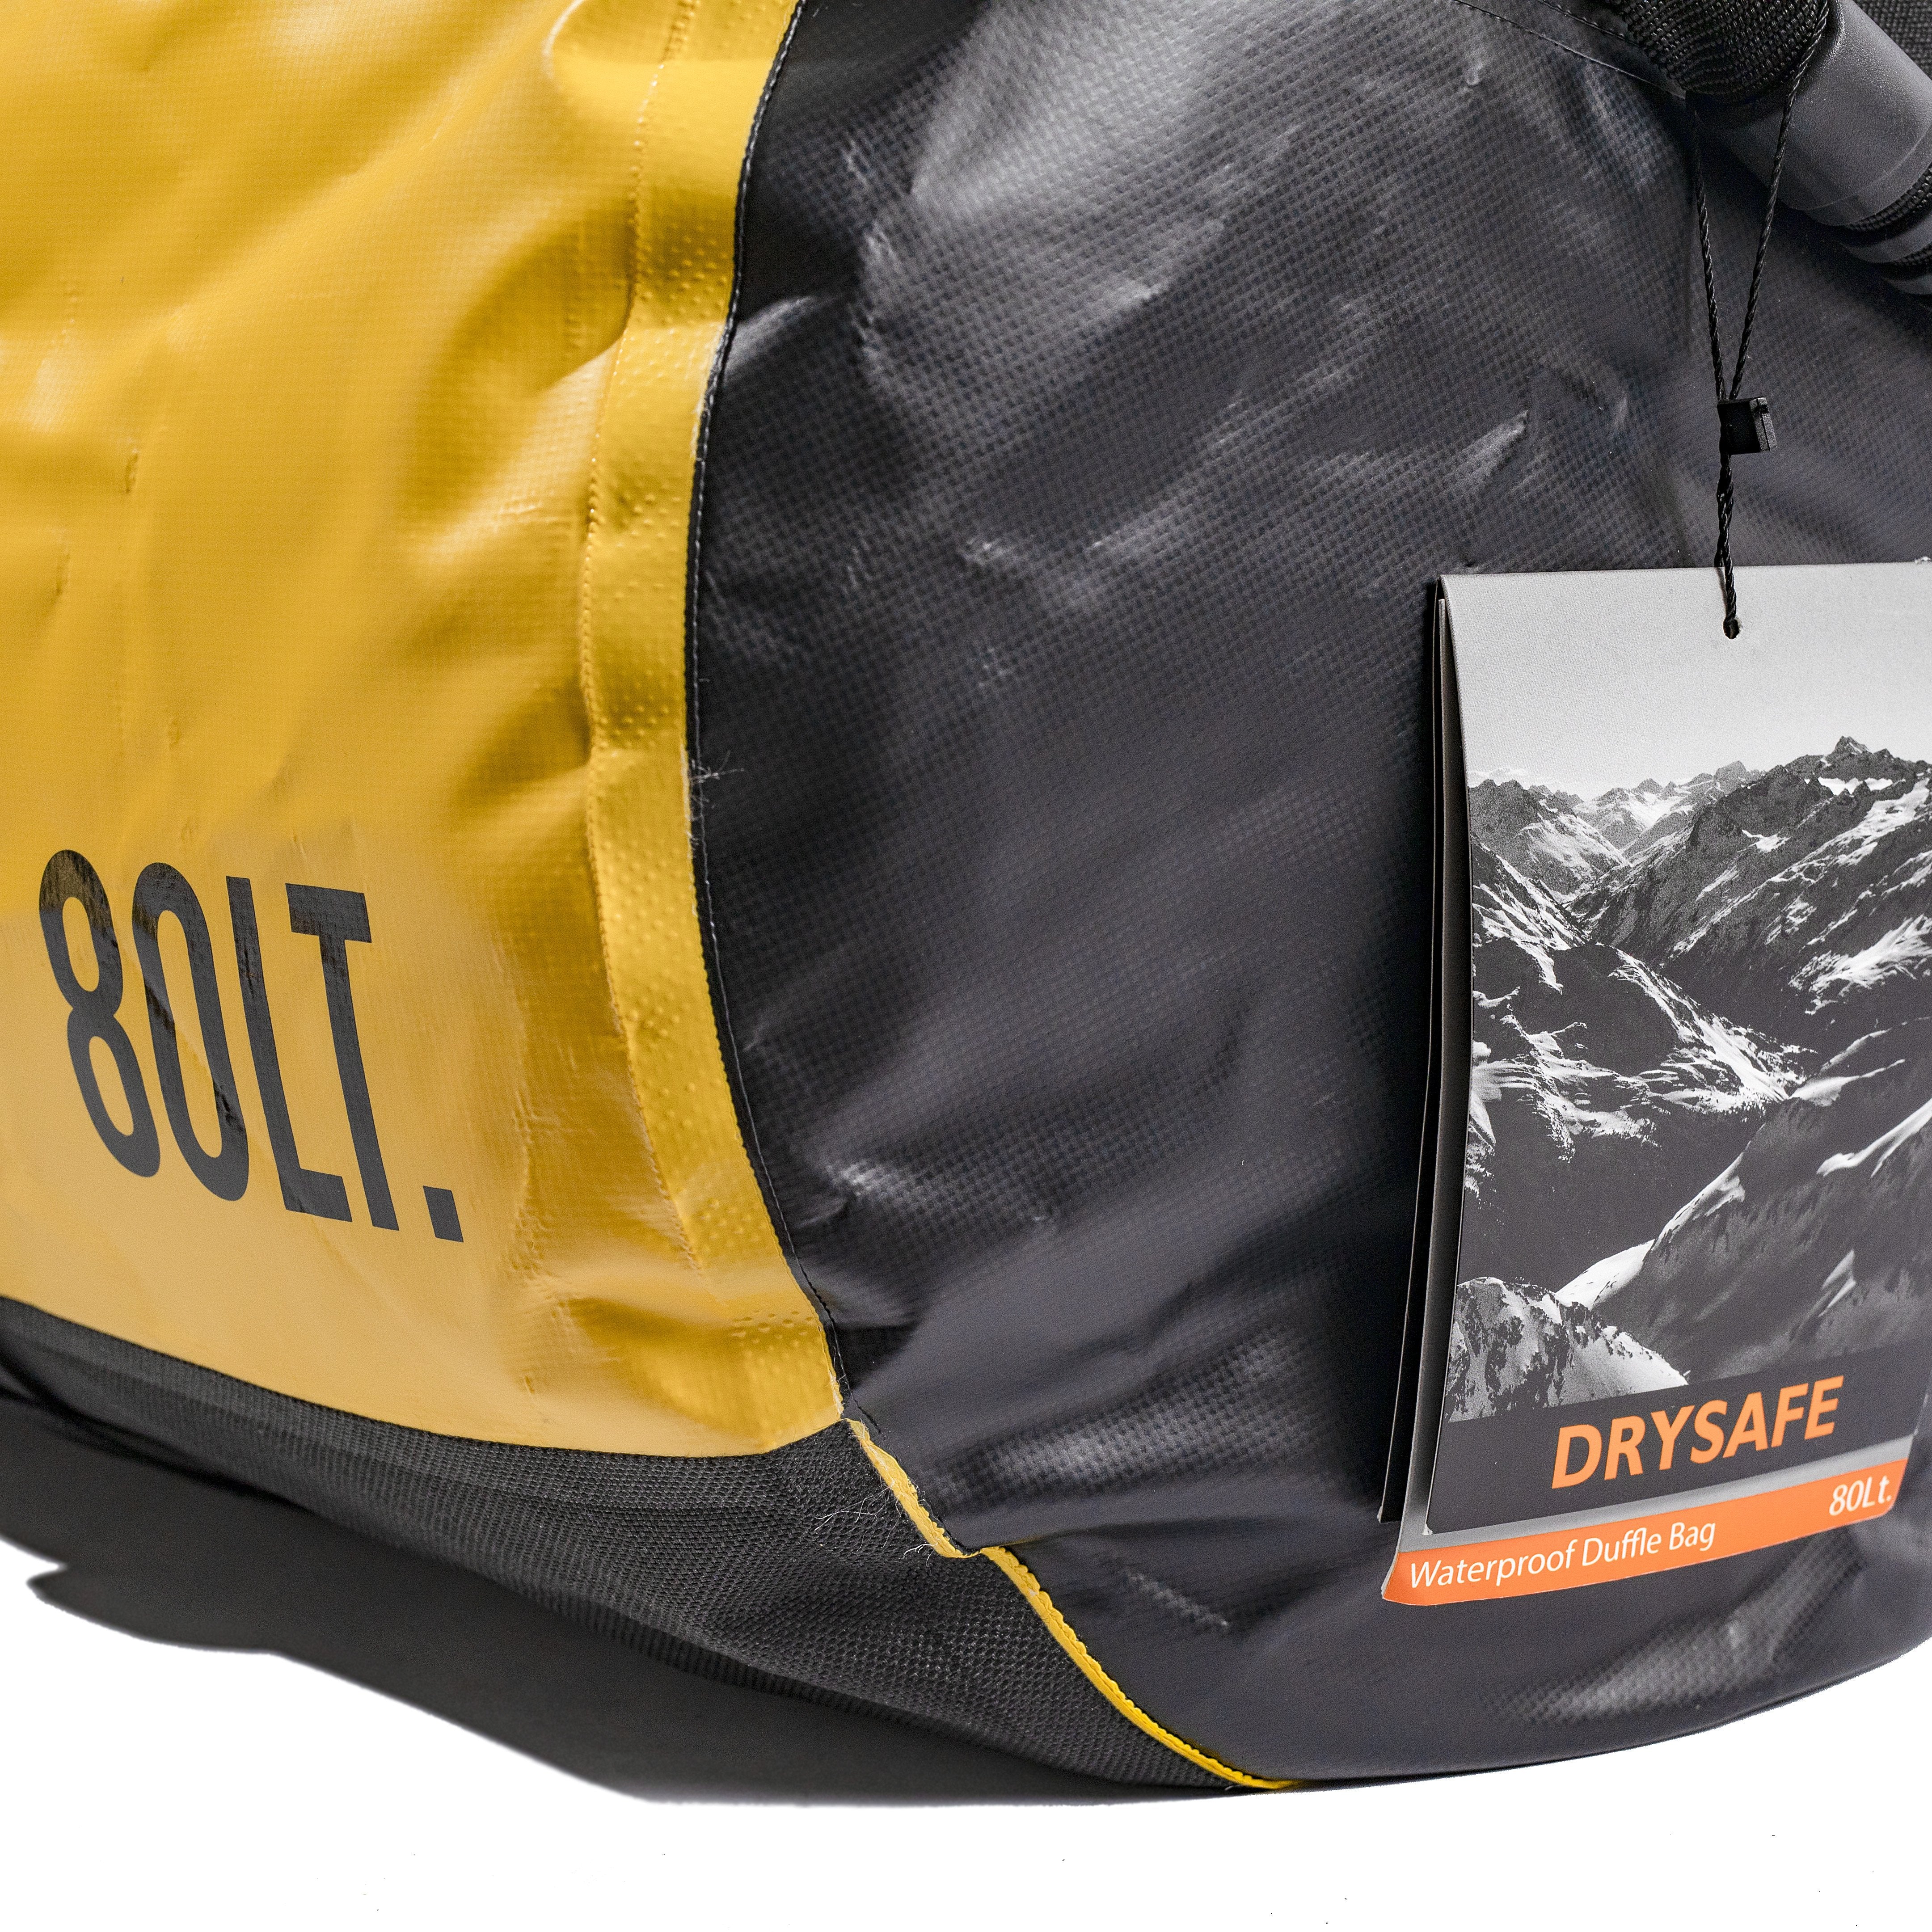 Bolso Duffel Bag 80 Litros Waterproof - Drysafe - Amarillo 3